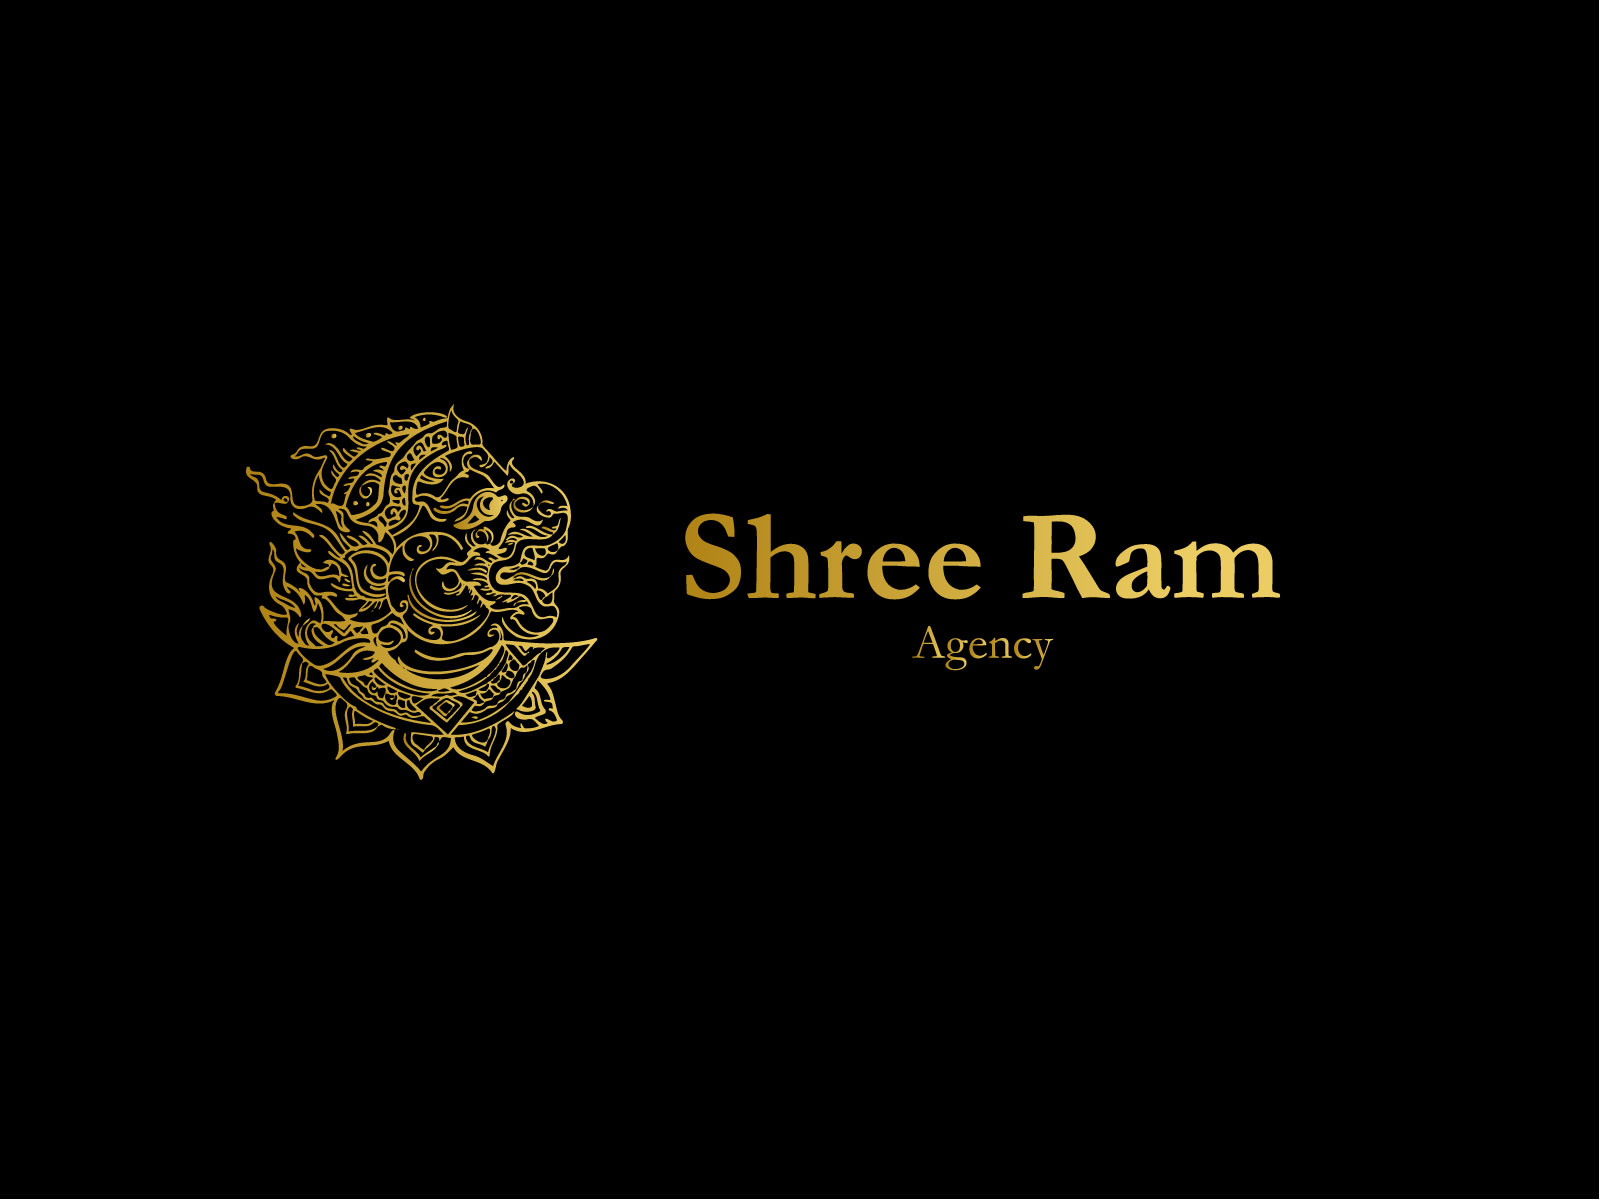 Jai Shree Ram Photos and Images